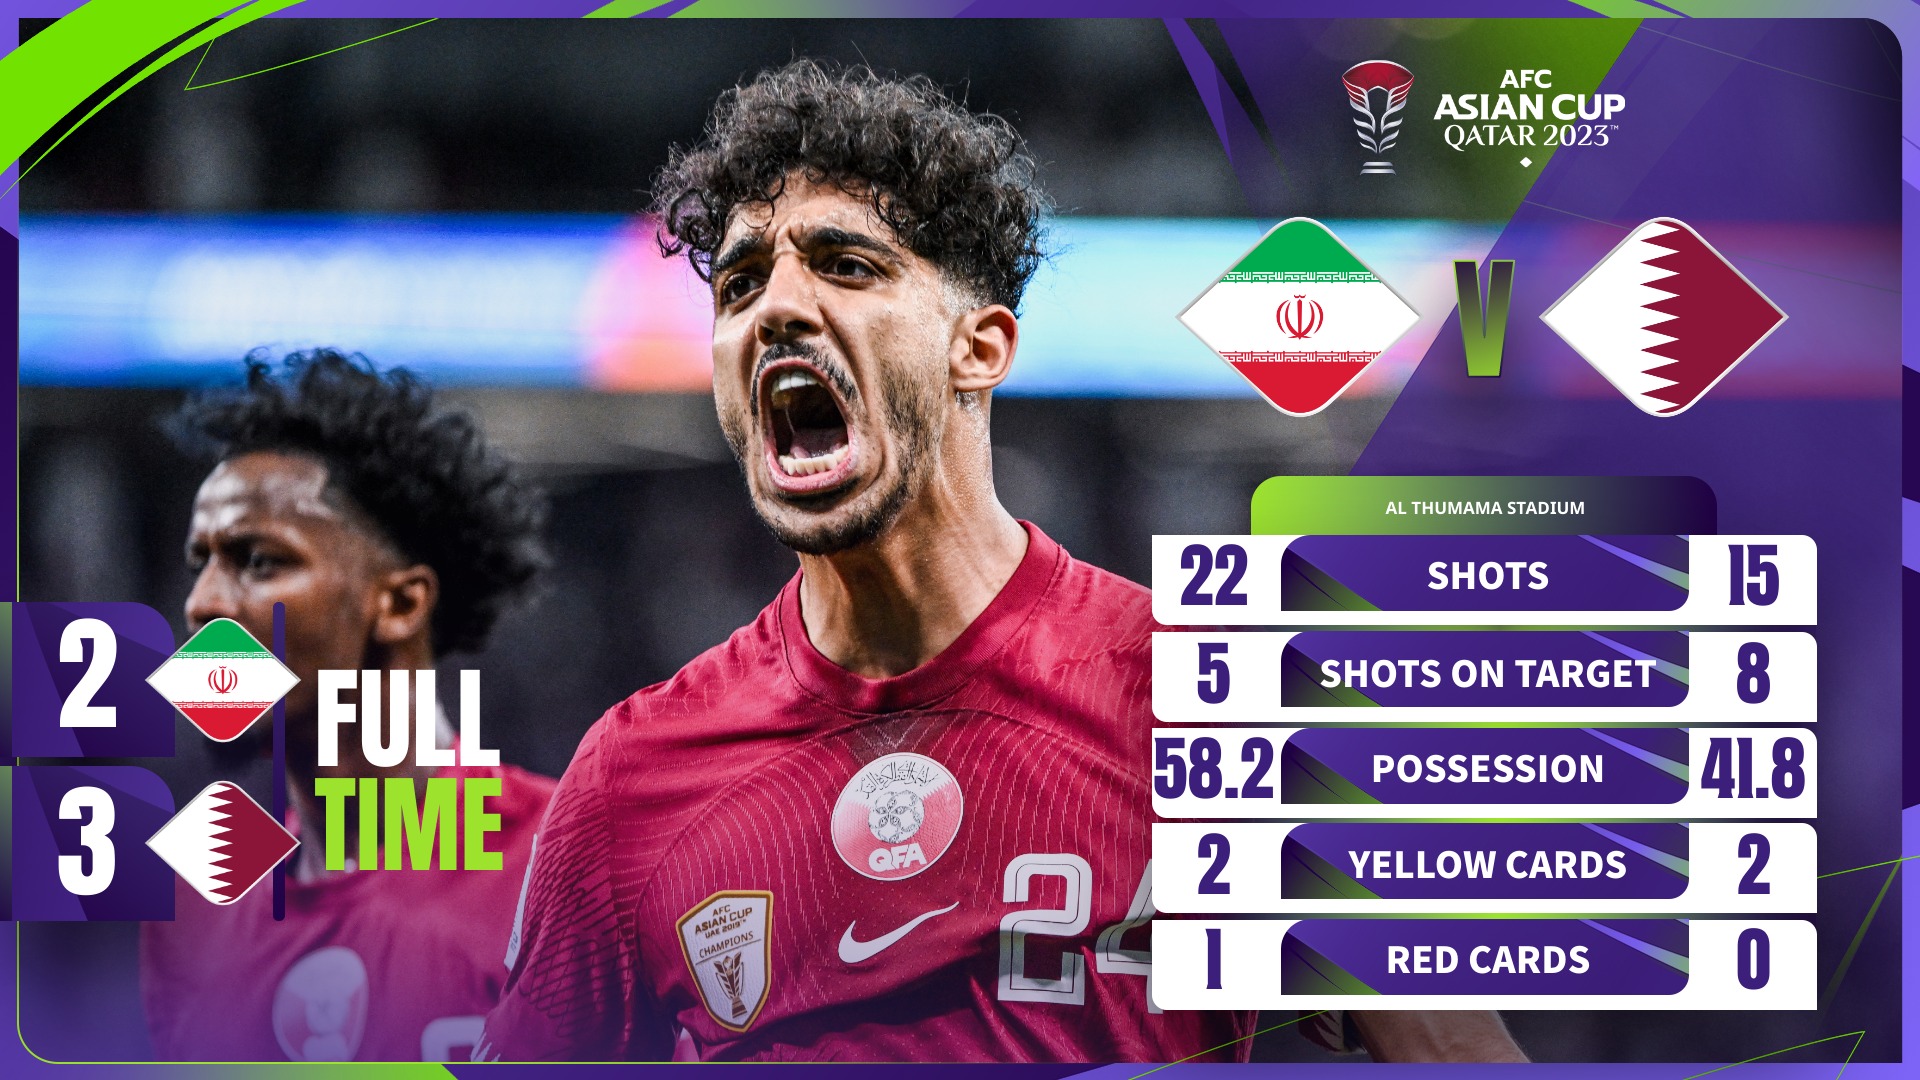 Qatar terus misi pertahankan kejuaraan Piala Asia, tewaskan Iran